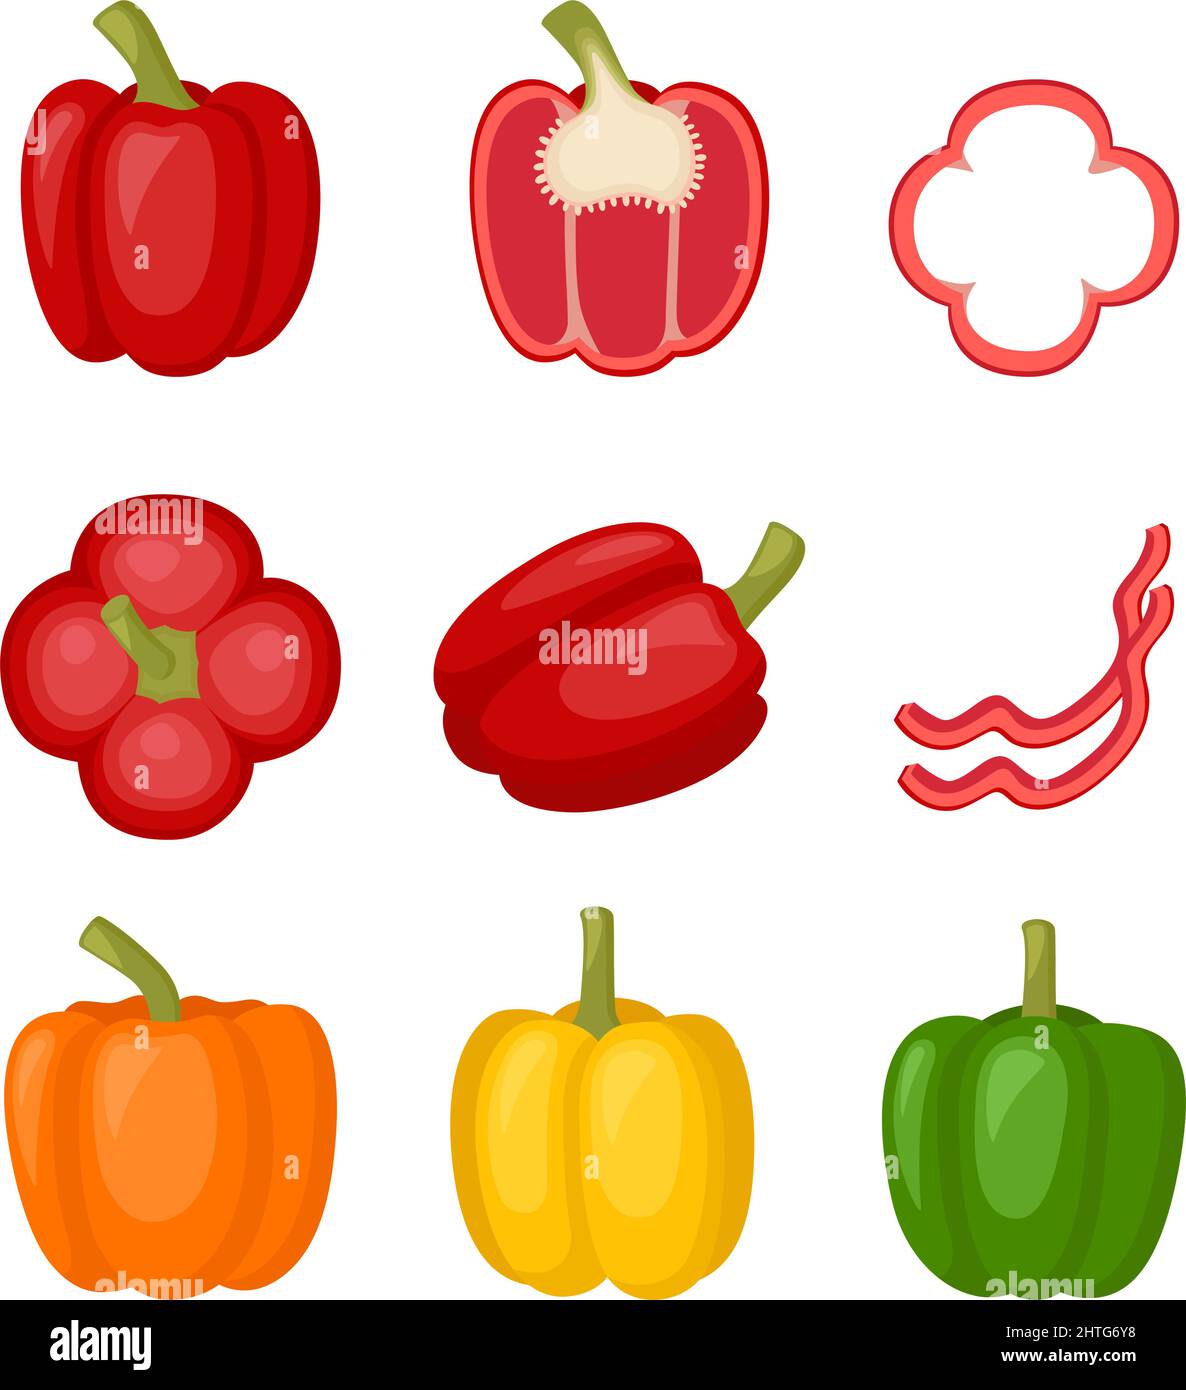 Peperoni rossi dolci, gialli, arancioni, peperoni. Fettine di pepe, taglia metà paprika piena, illustrazione vettoriale Illustrazione Vettoriale